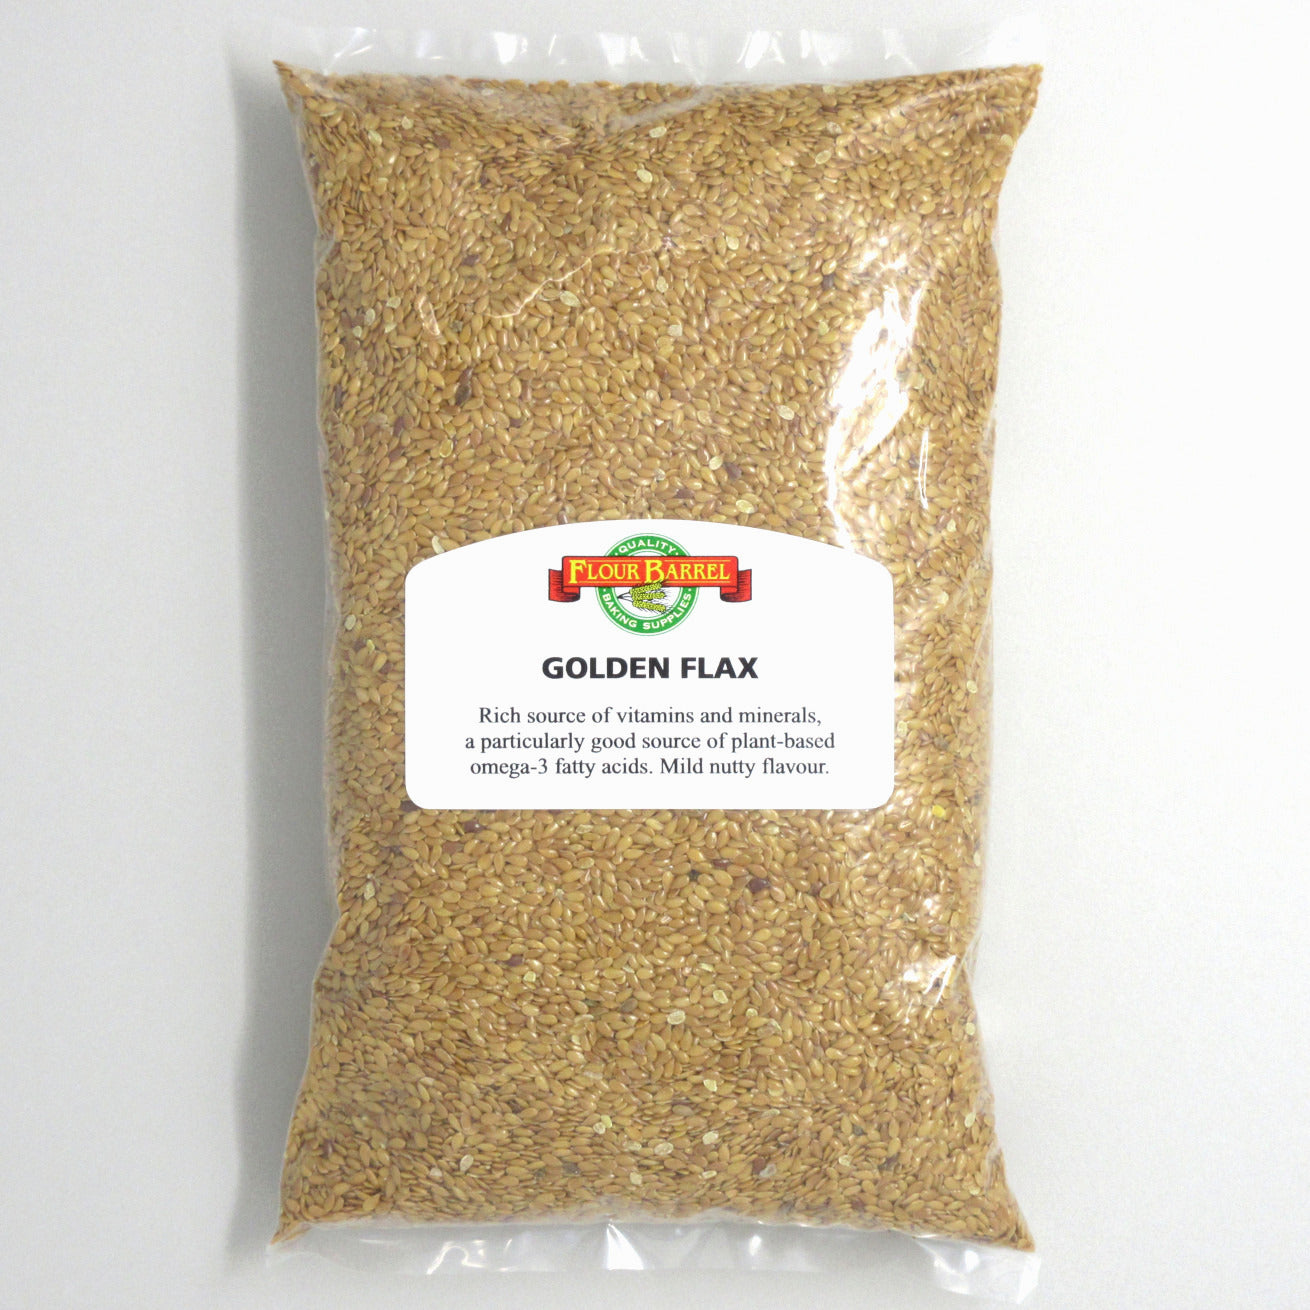 Flour Barrel product image - Golden Flax